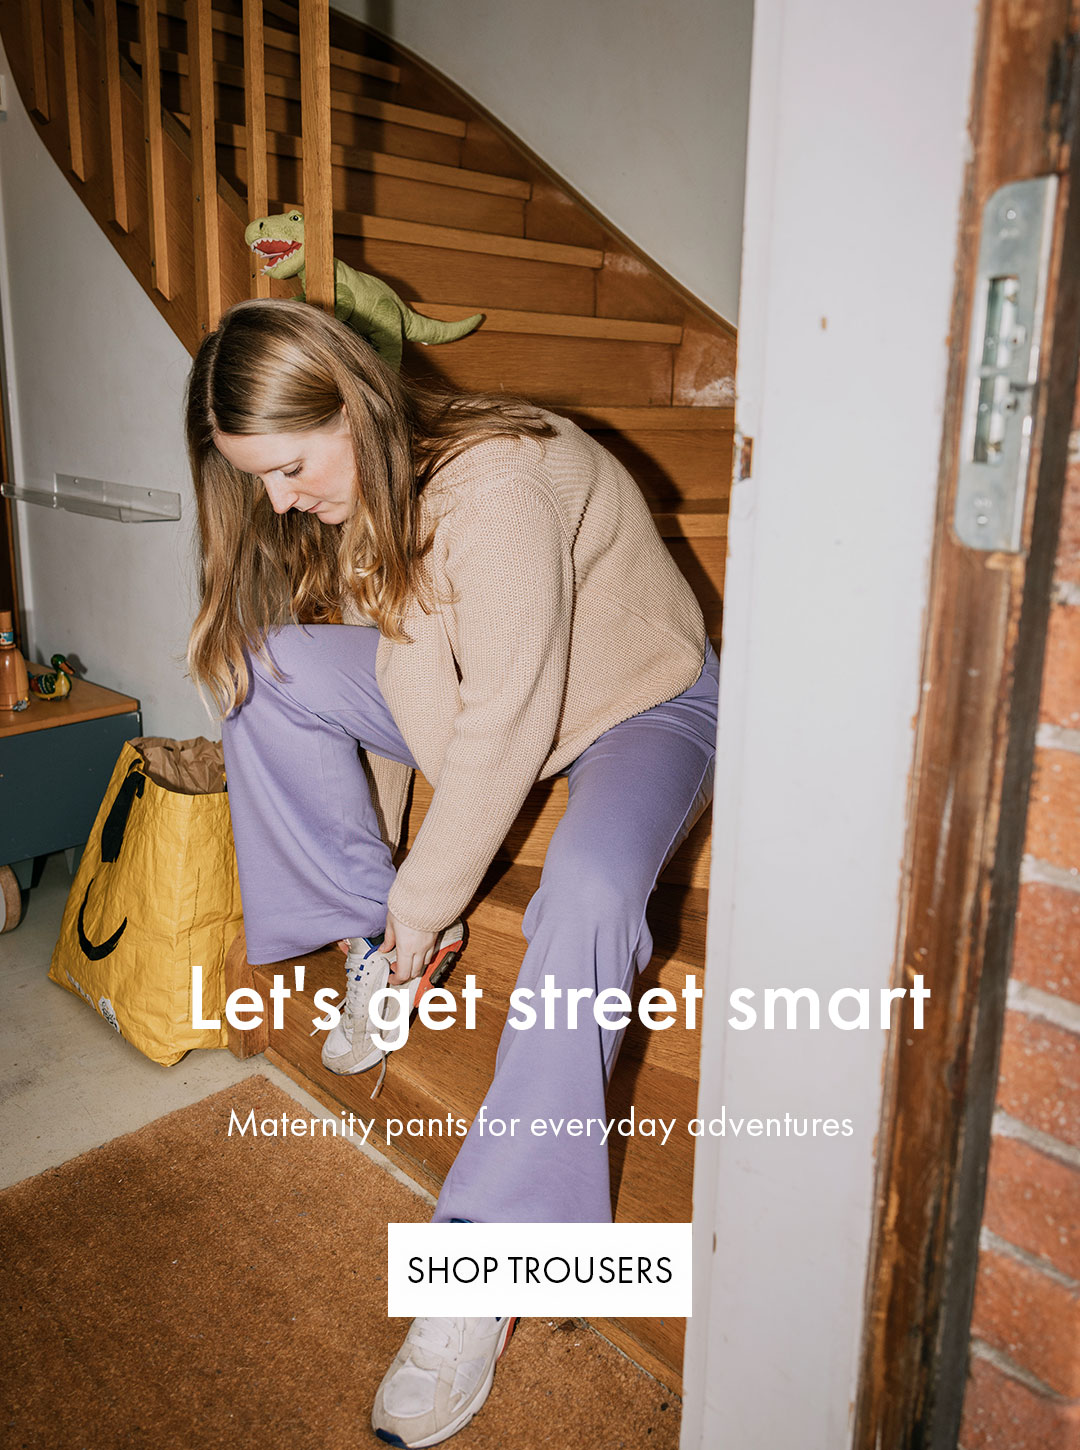 Let's get street smart